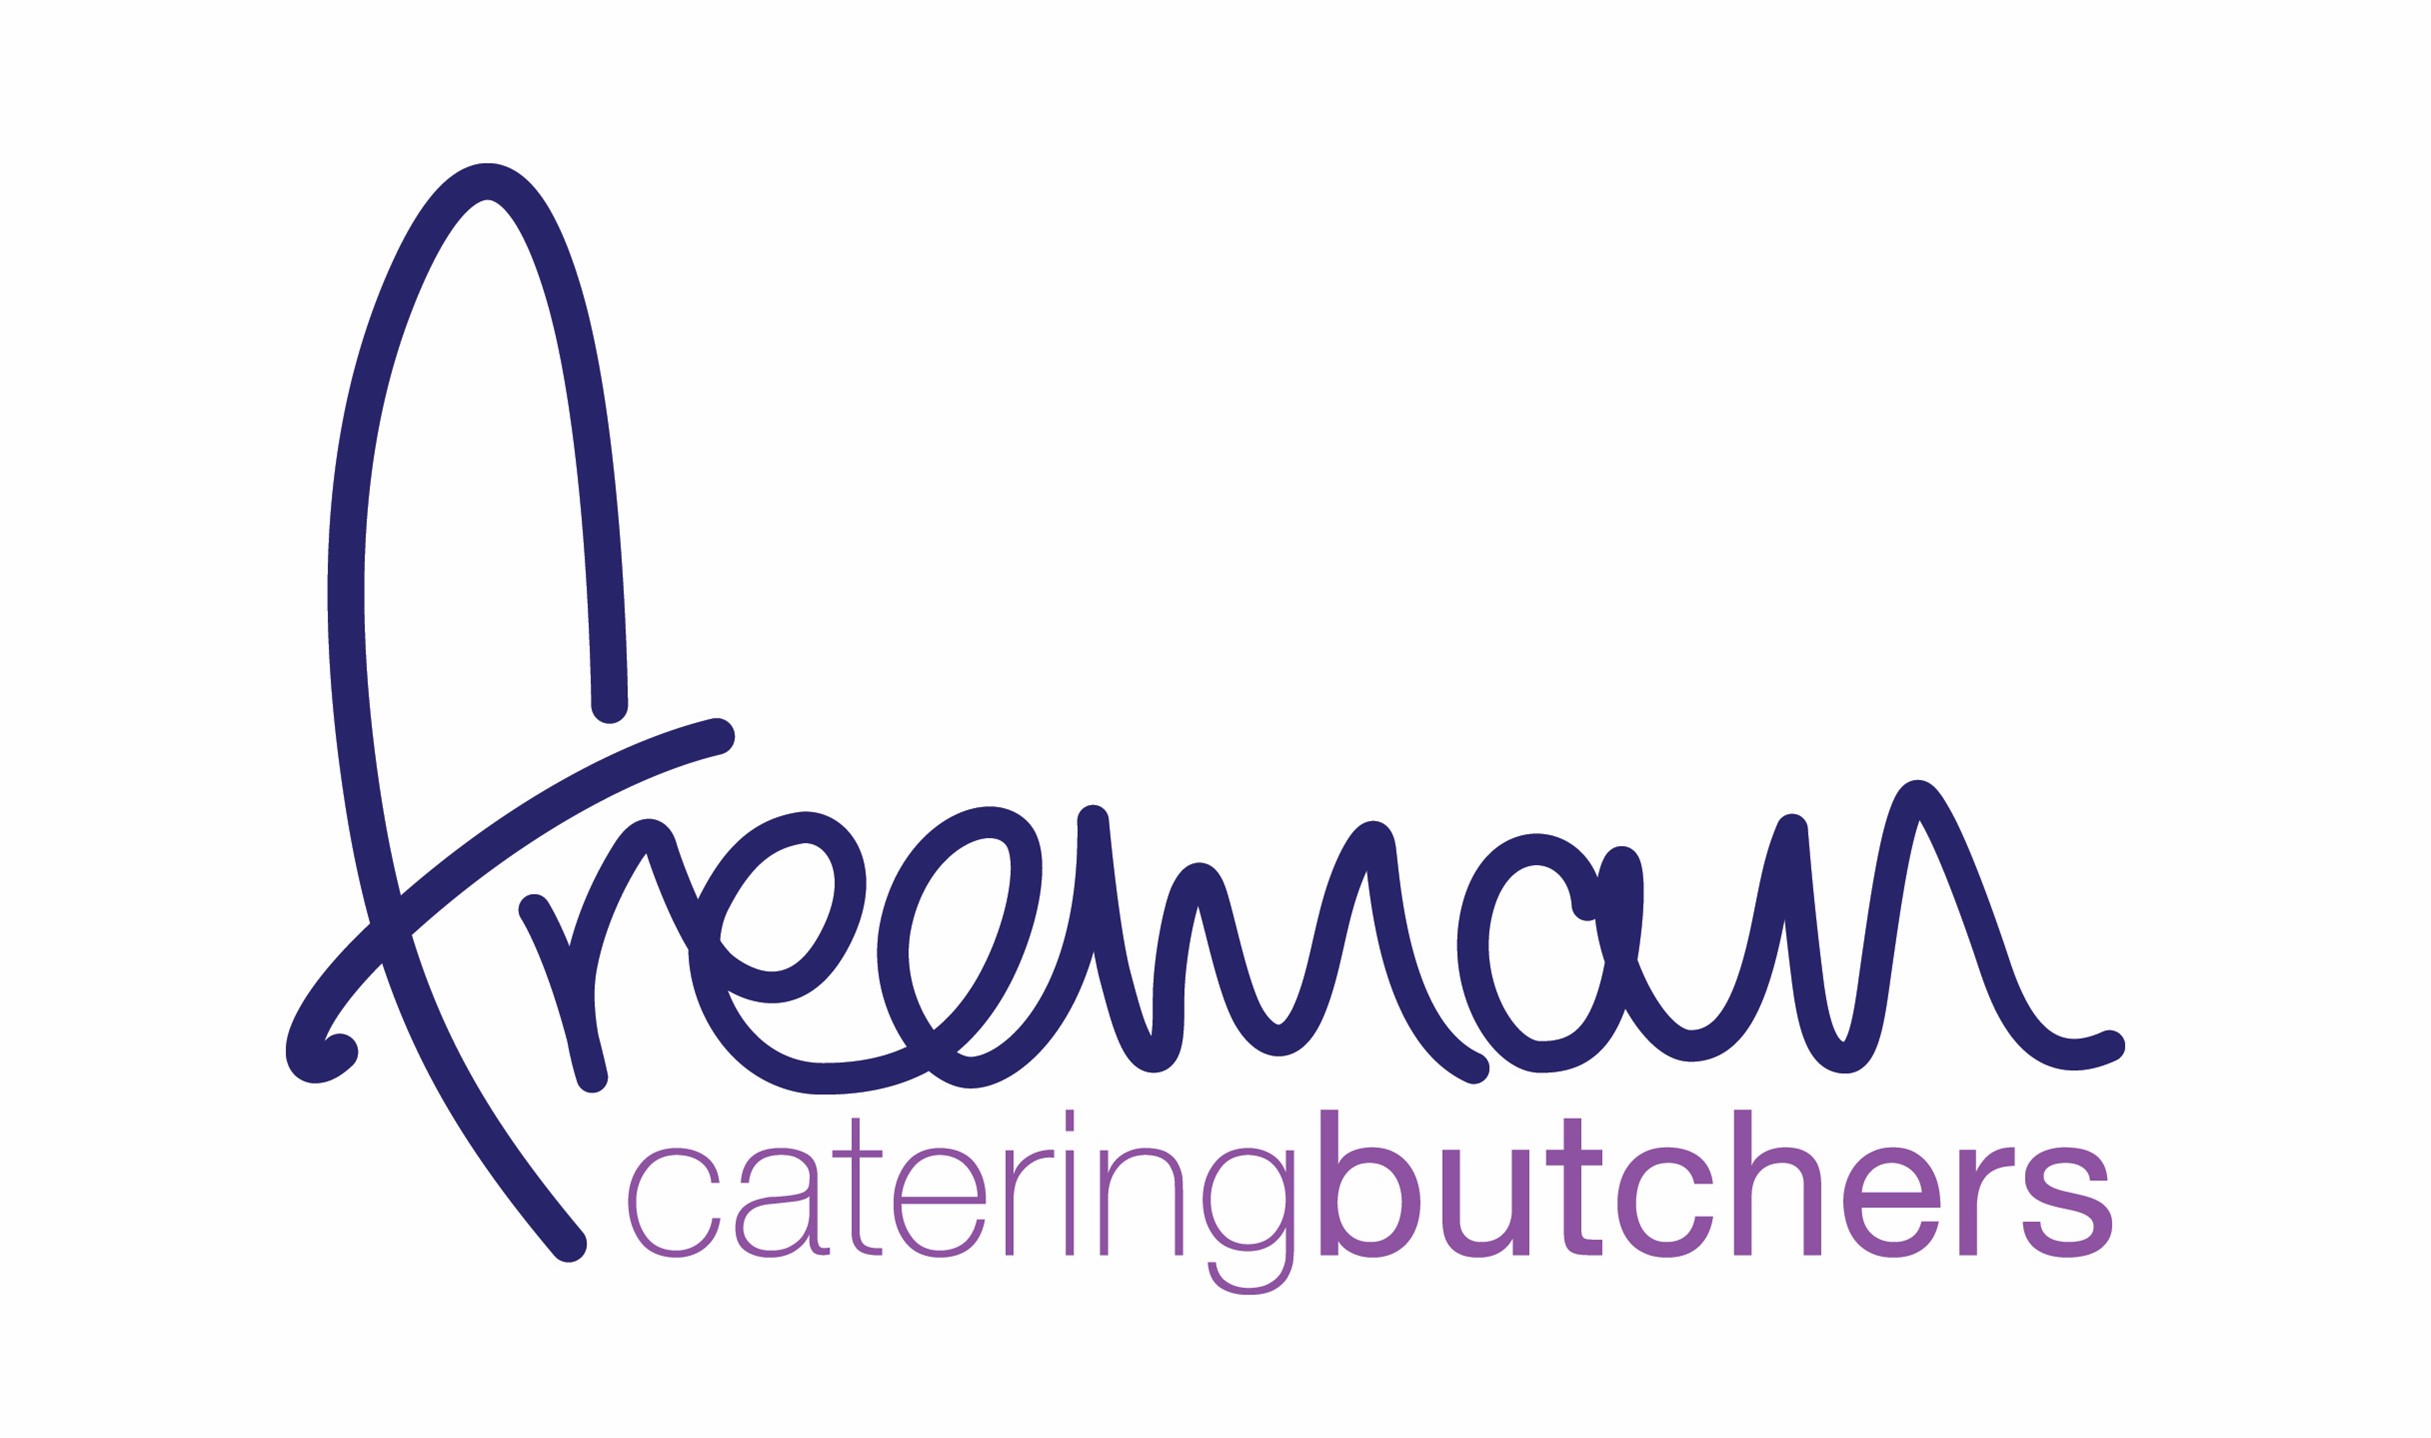 Freeman Catering Butchers Ltd image.